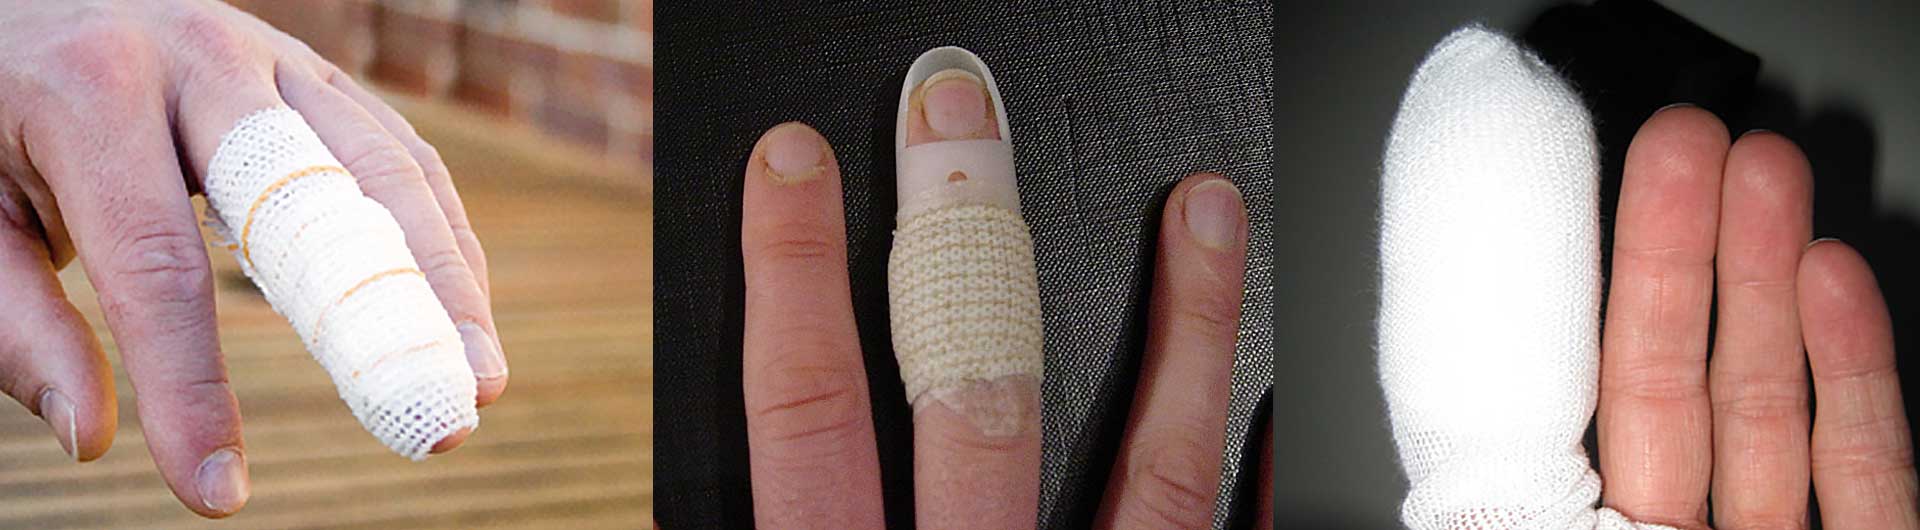 injured fingers